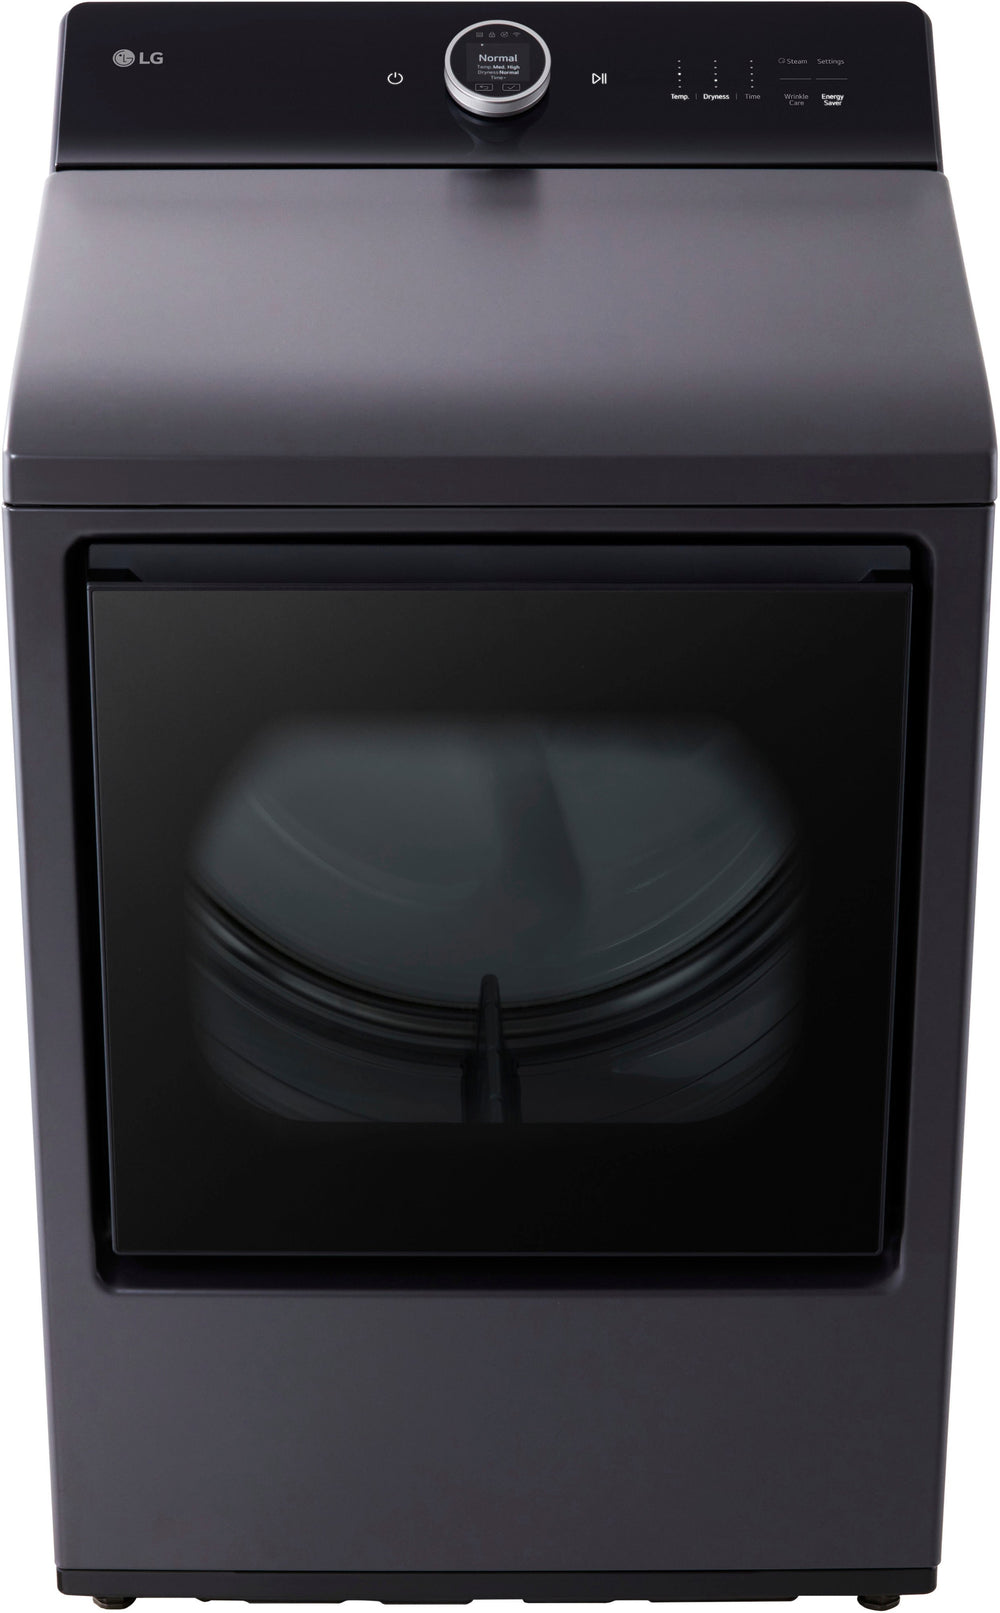 LG - 7.3 Cu. Ft. Smart Electric Dryer with Steam and EasyLoad Door - Matte Black_1